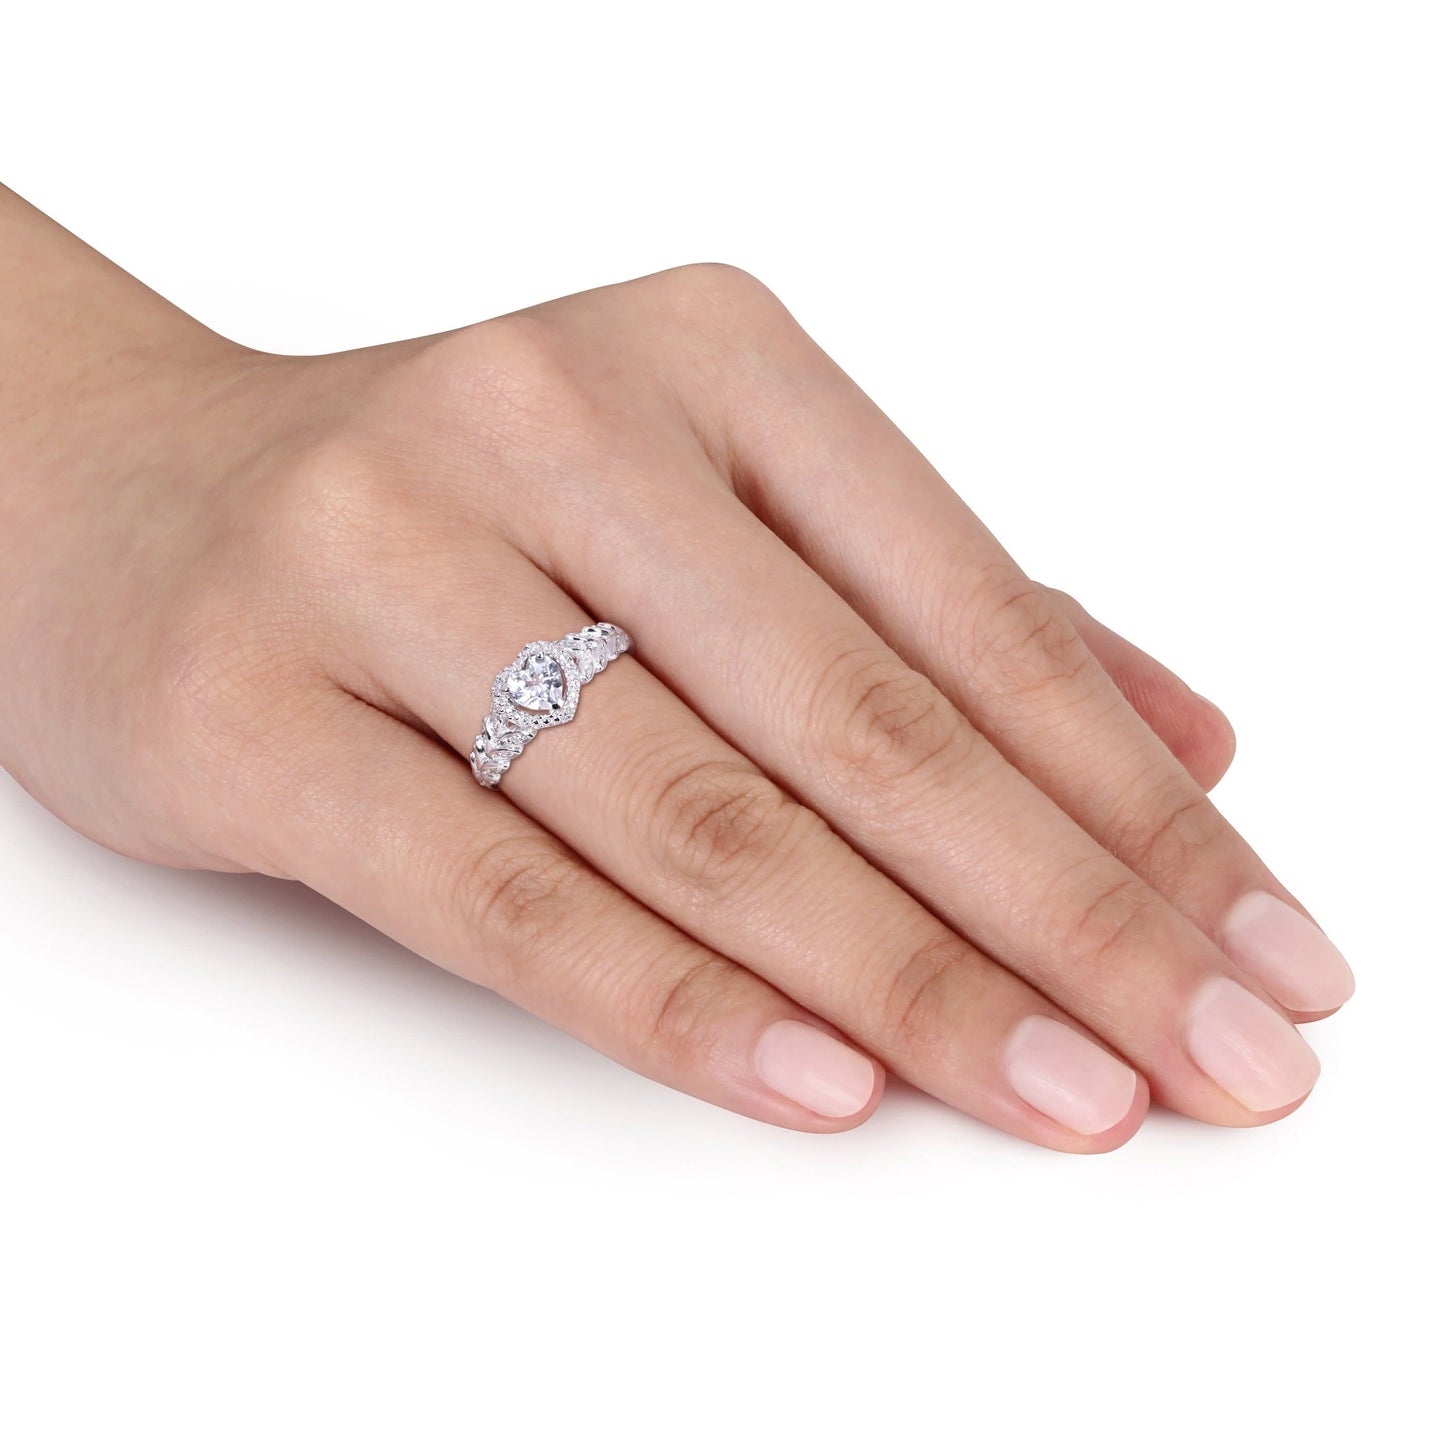 Julie Leah White Sapphire & Diamond Halo Heart Ring in 10k White Gold